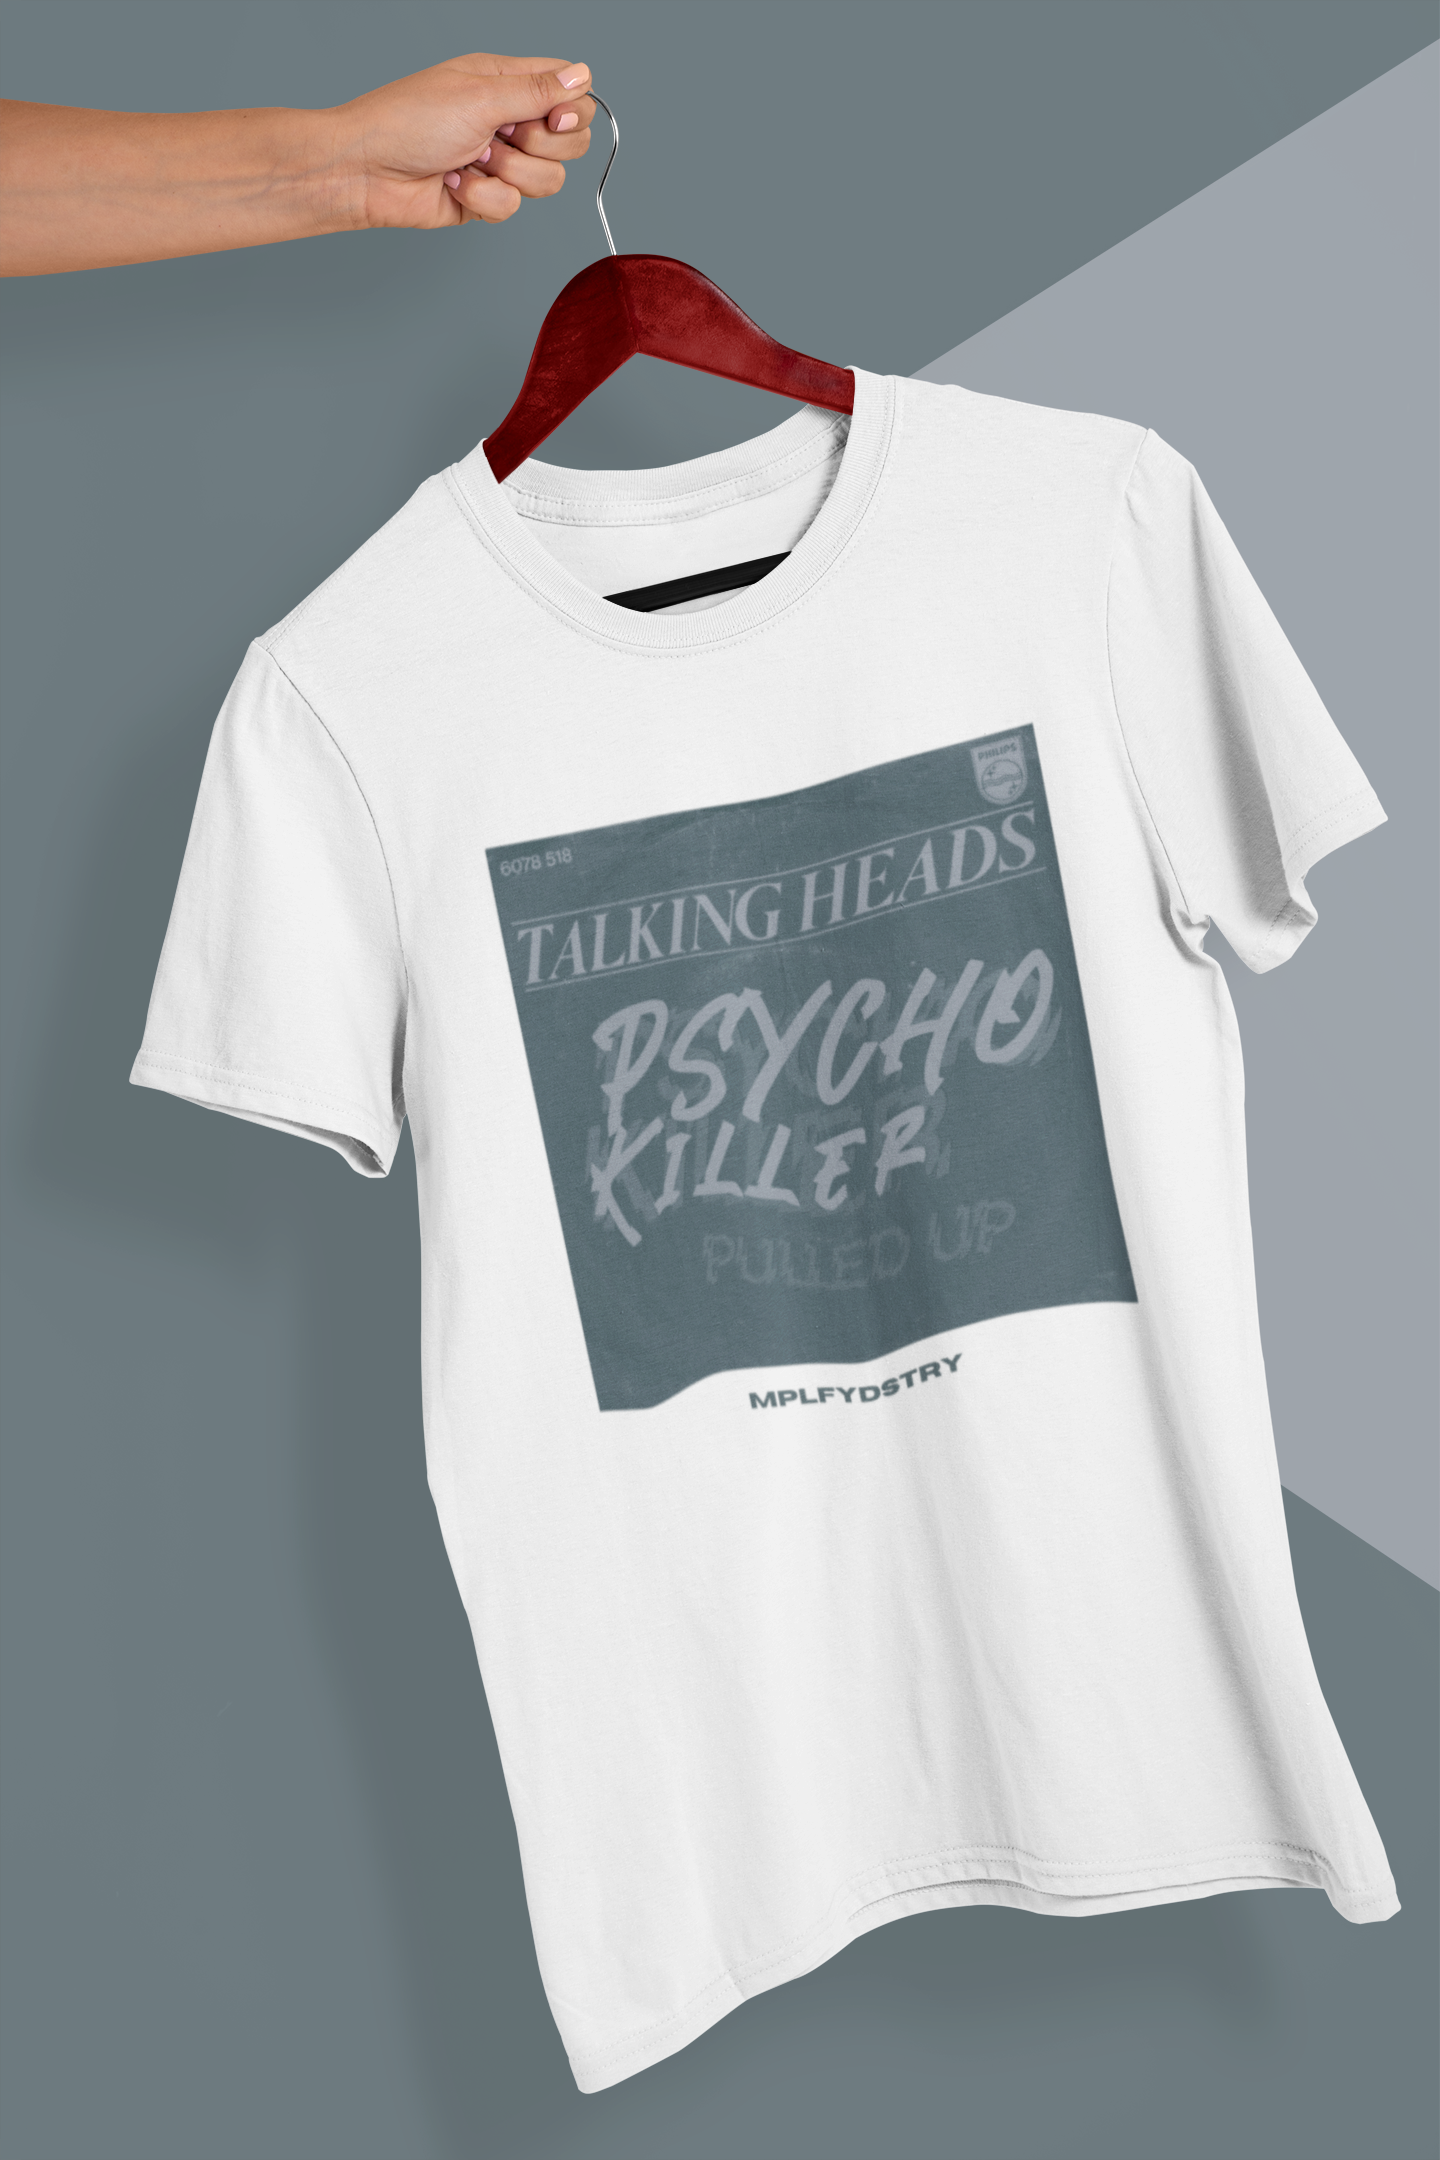 PYSCHO KILLER Classic Fit AmplifyDestroy Print Tee Shirt Talking Heads David Byrne